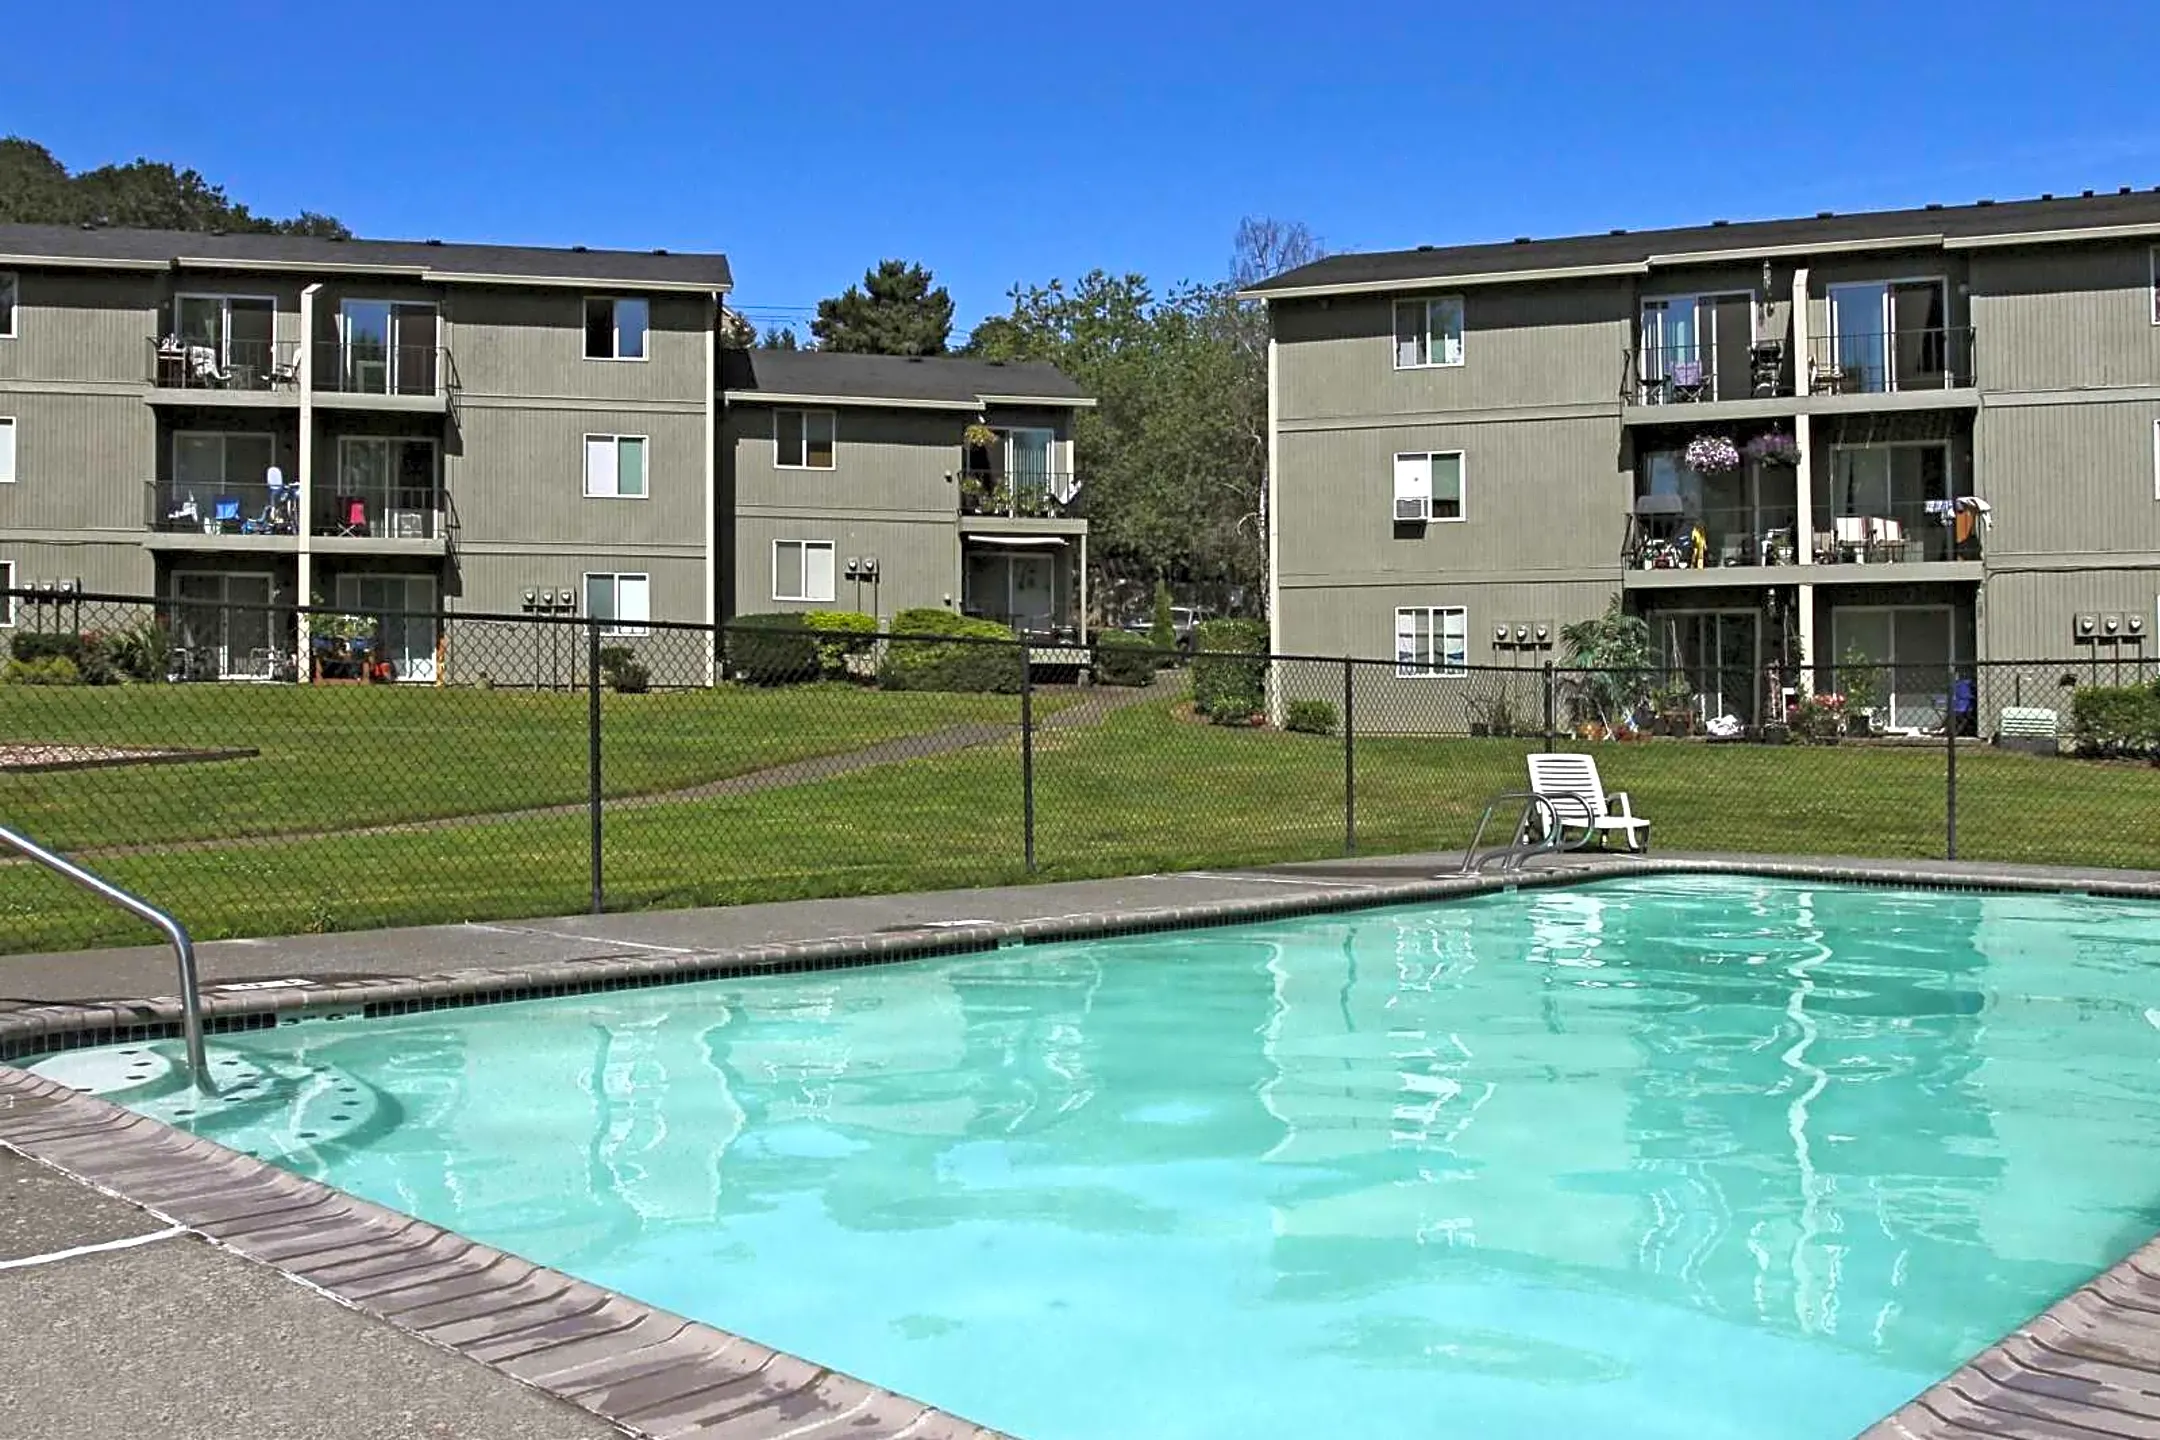 Pool - Willamette Terrace Apartments - West Linn, OR